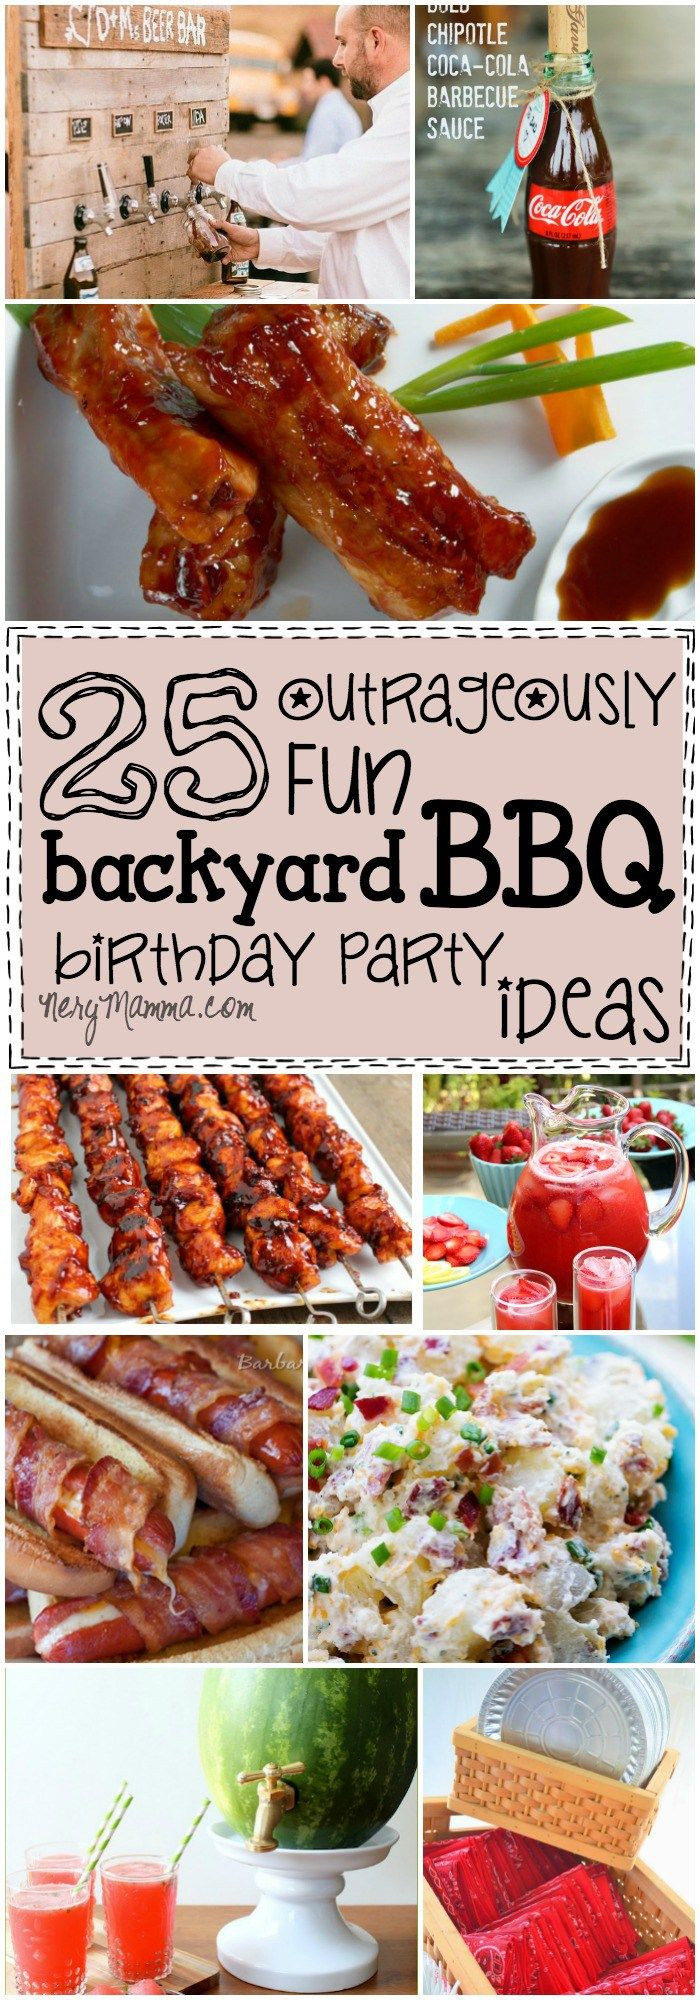 Birthday Party Bbq Food Ideas
 25 Outrageously Fun Backyard BBQ Birthday Party Ideas